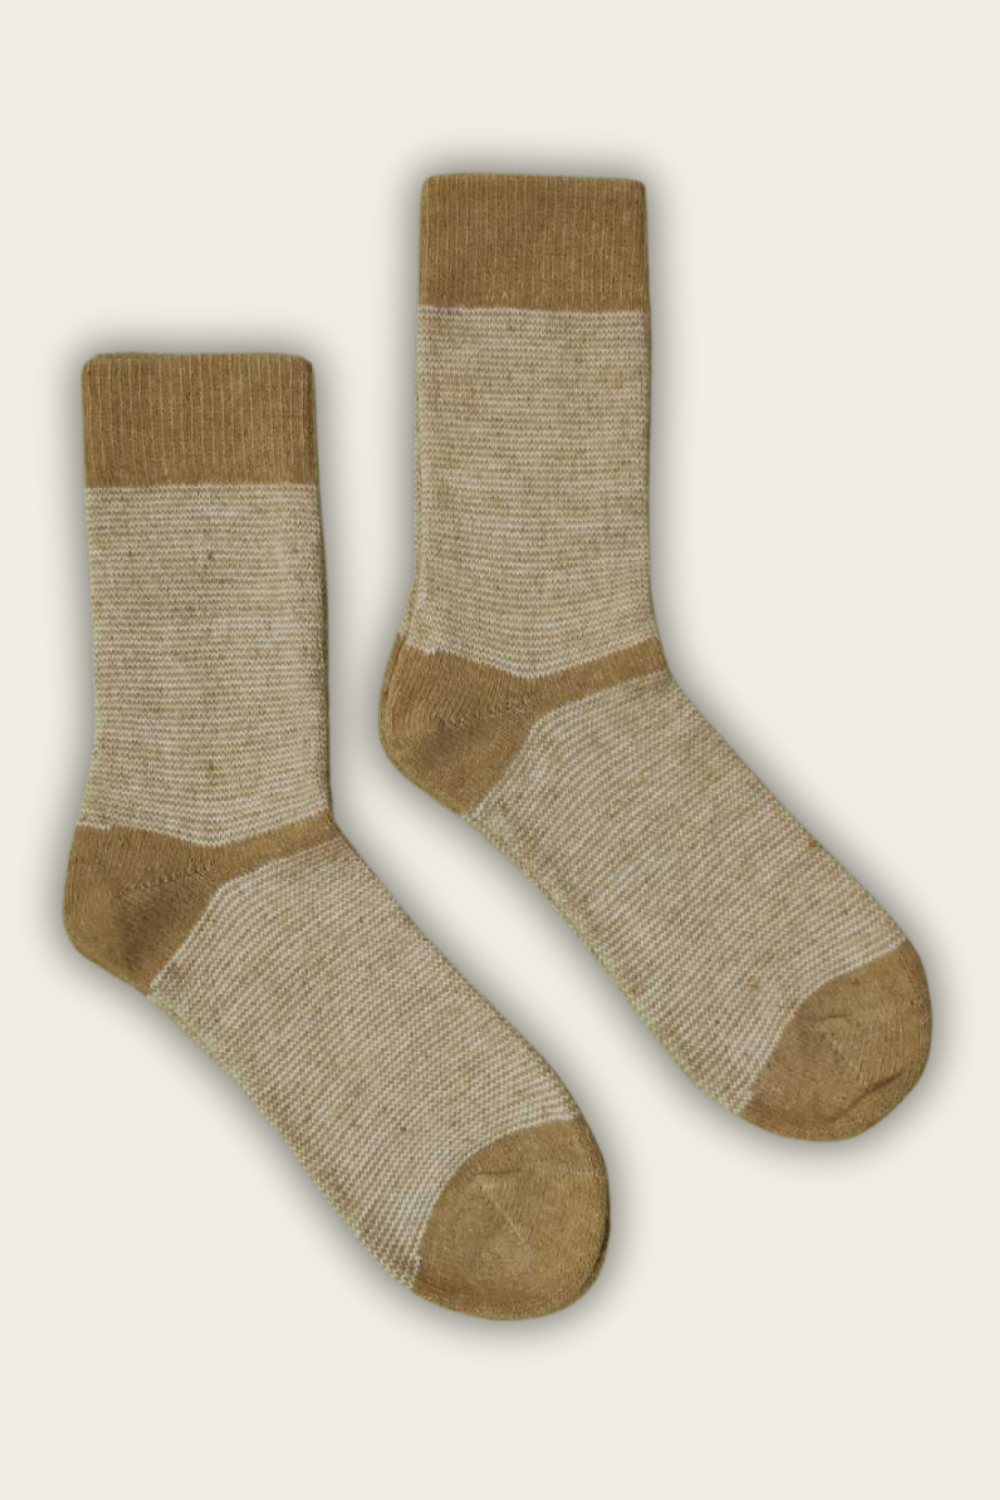 Socken mit Alpaka und Merino-Wolle - dunkelgelb - 2 Paar